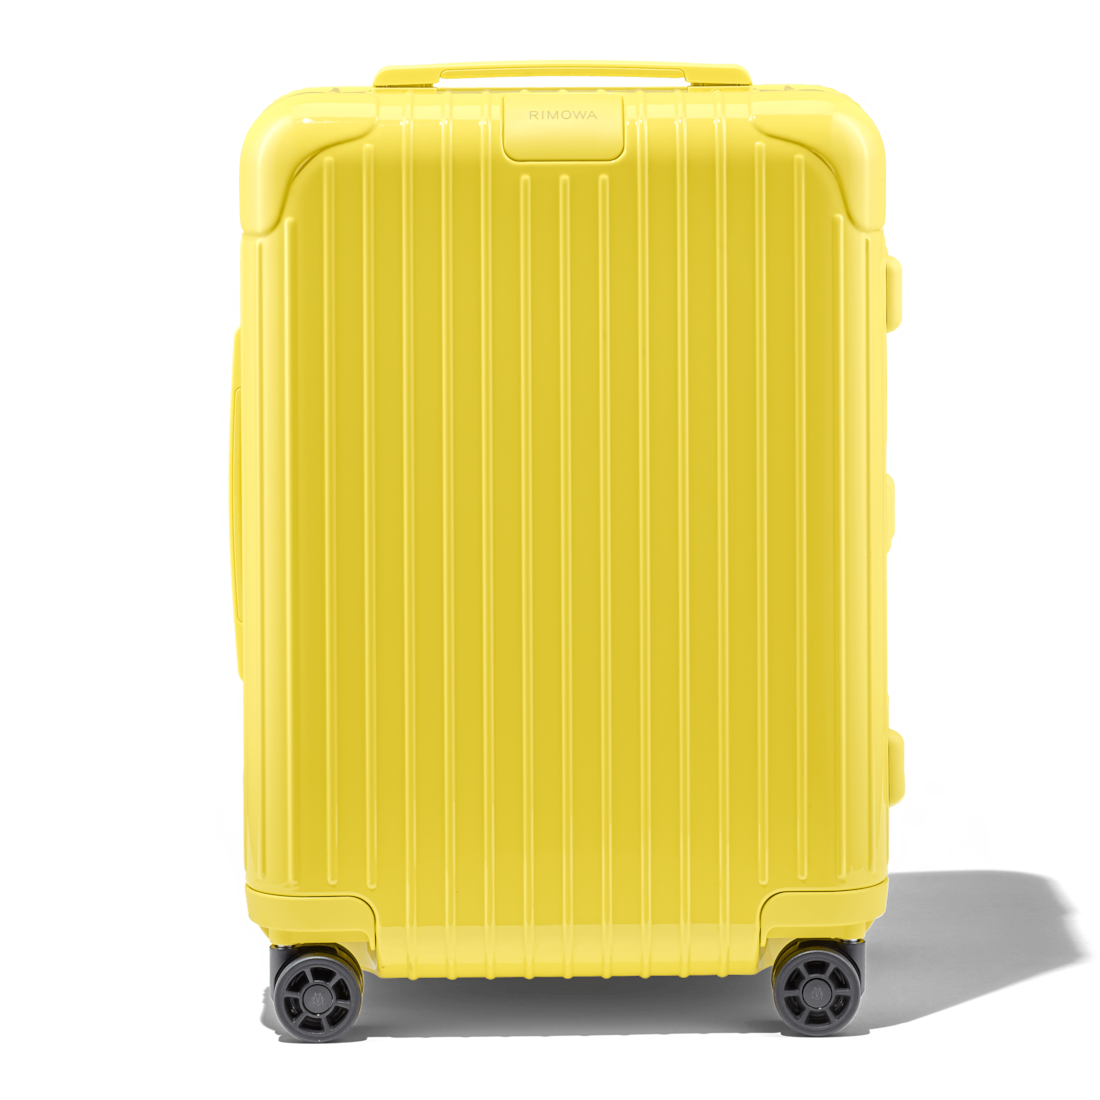 rimowa luggage carry on size